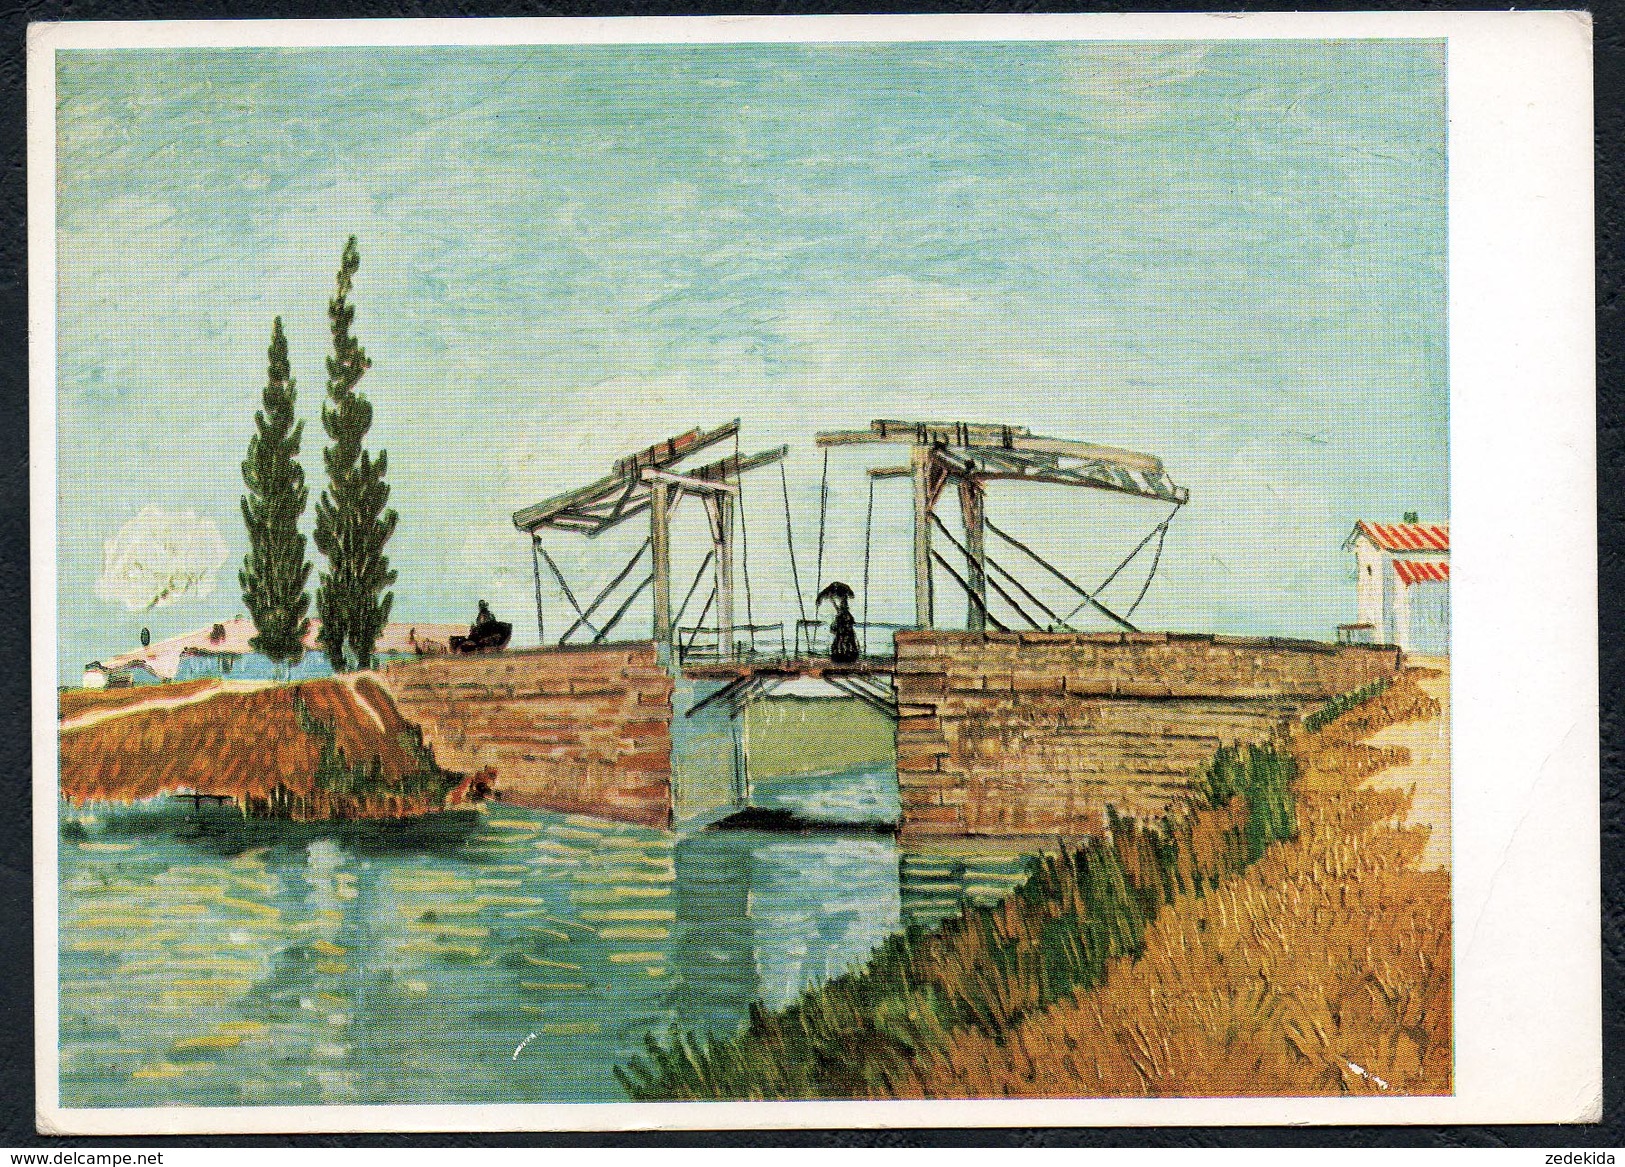 A6491 - Alte Künstlerkarte - Vincent Van Gogh - Landschaft Mit Brücke - Ettal - Van Gogh, Vincent